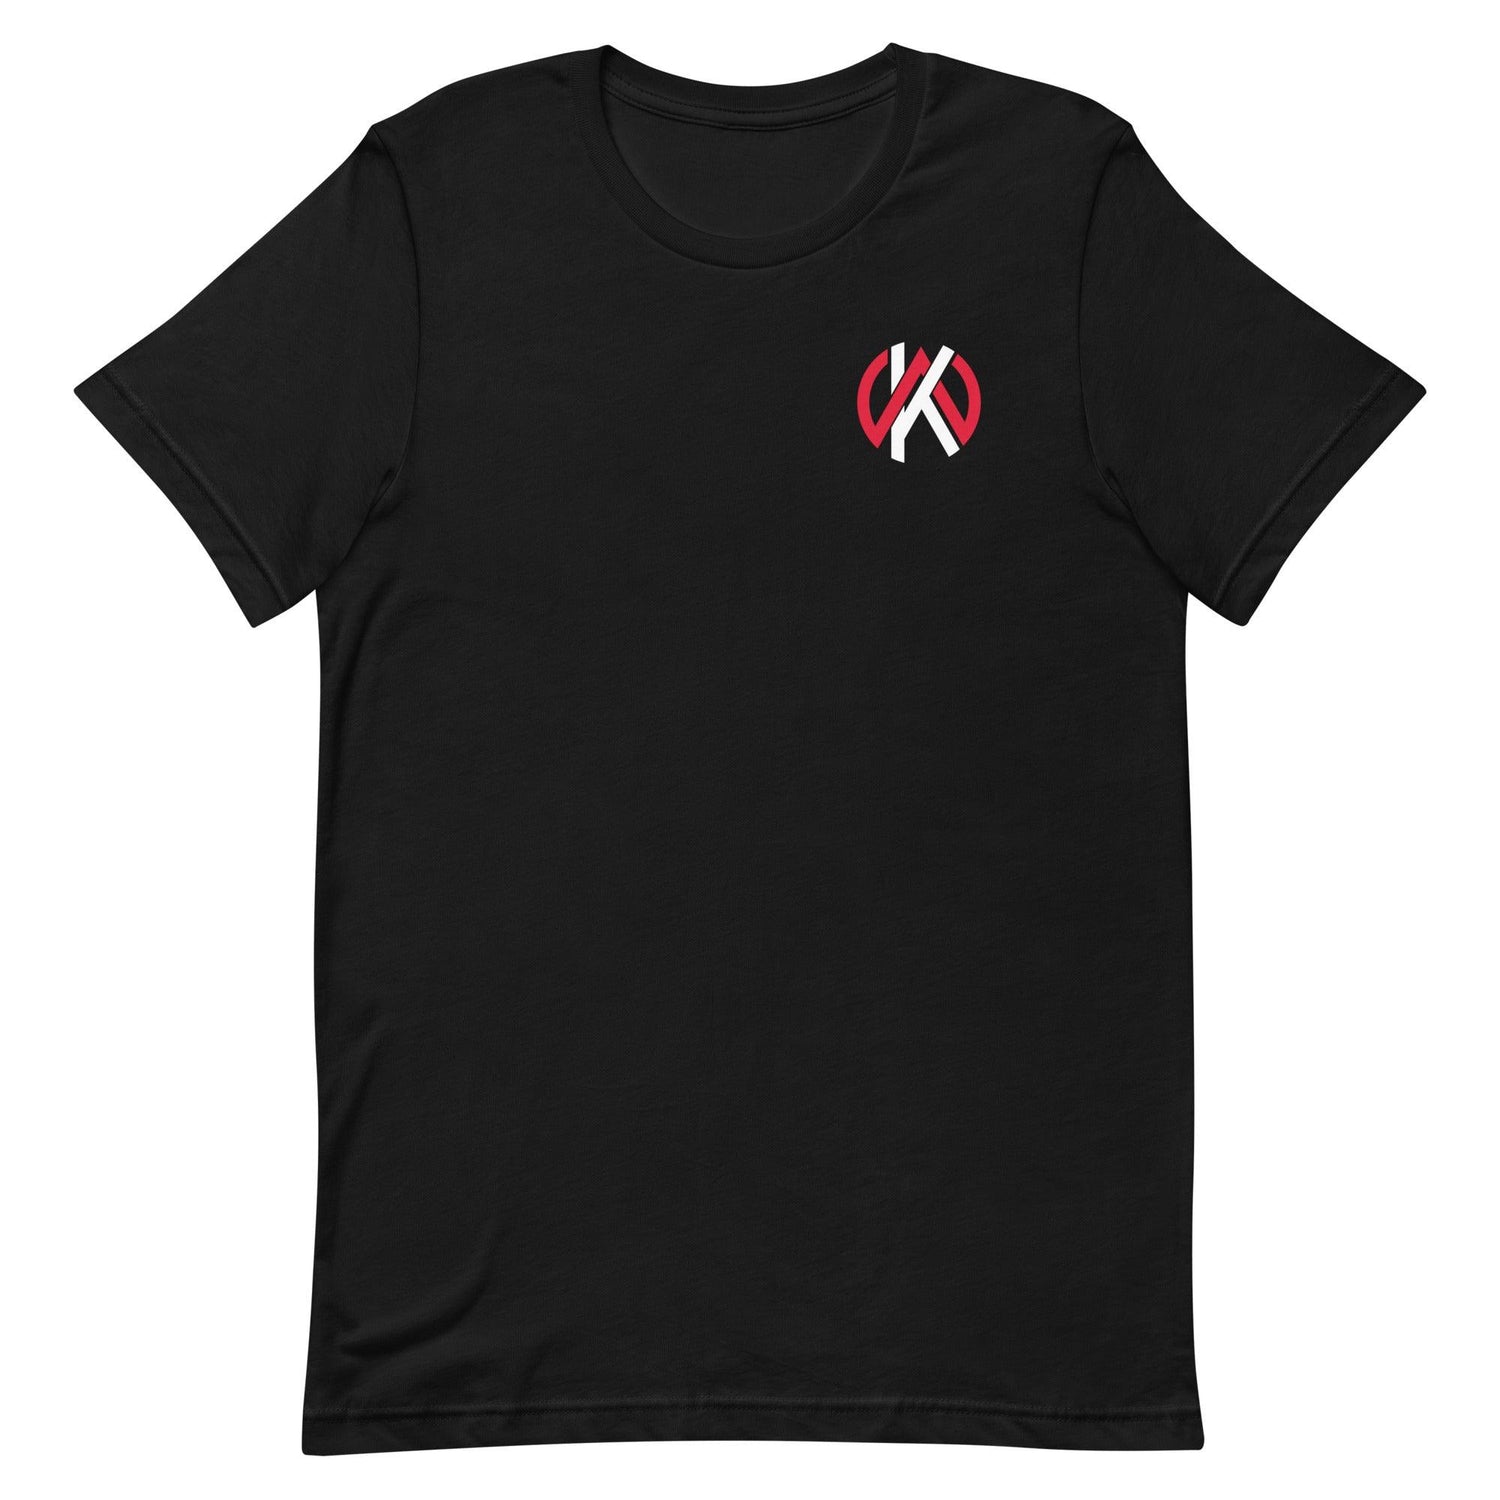 Kaine Williams “KW” t-shirt - Fan Arch